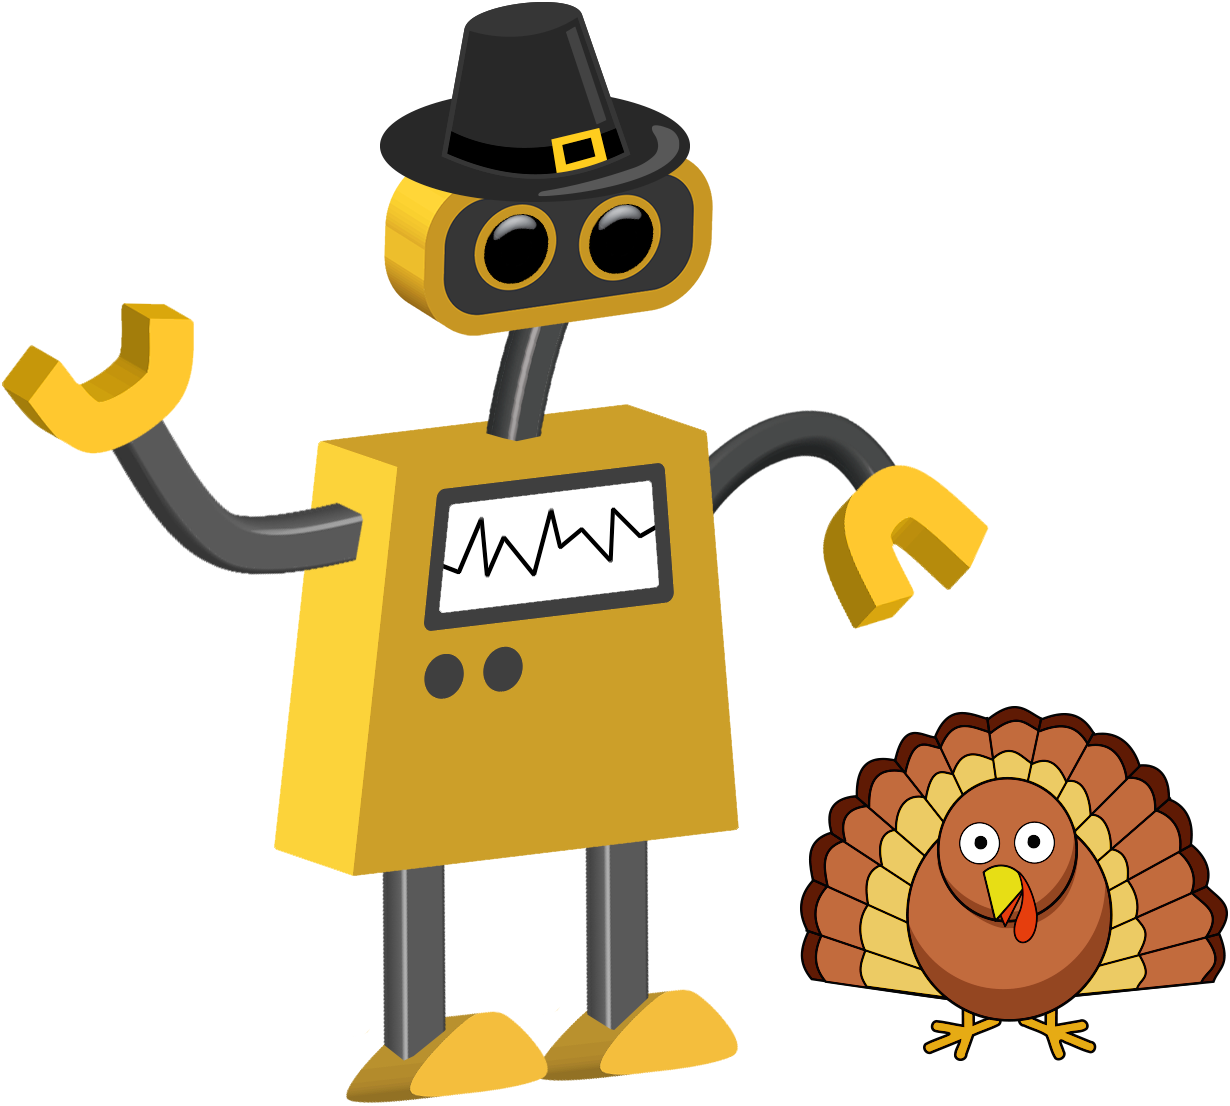 Happy Thanksgiving Day From Robotics Under The Stole - Robot Turkey (1230x1106)